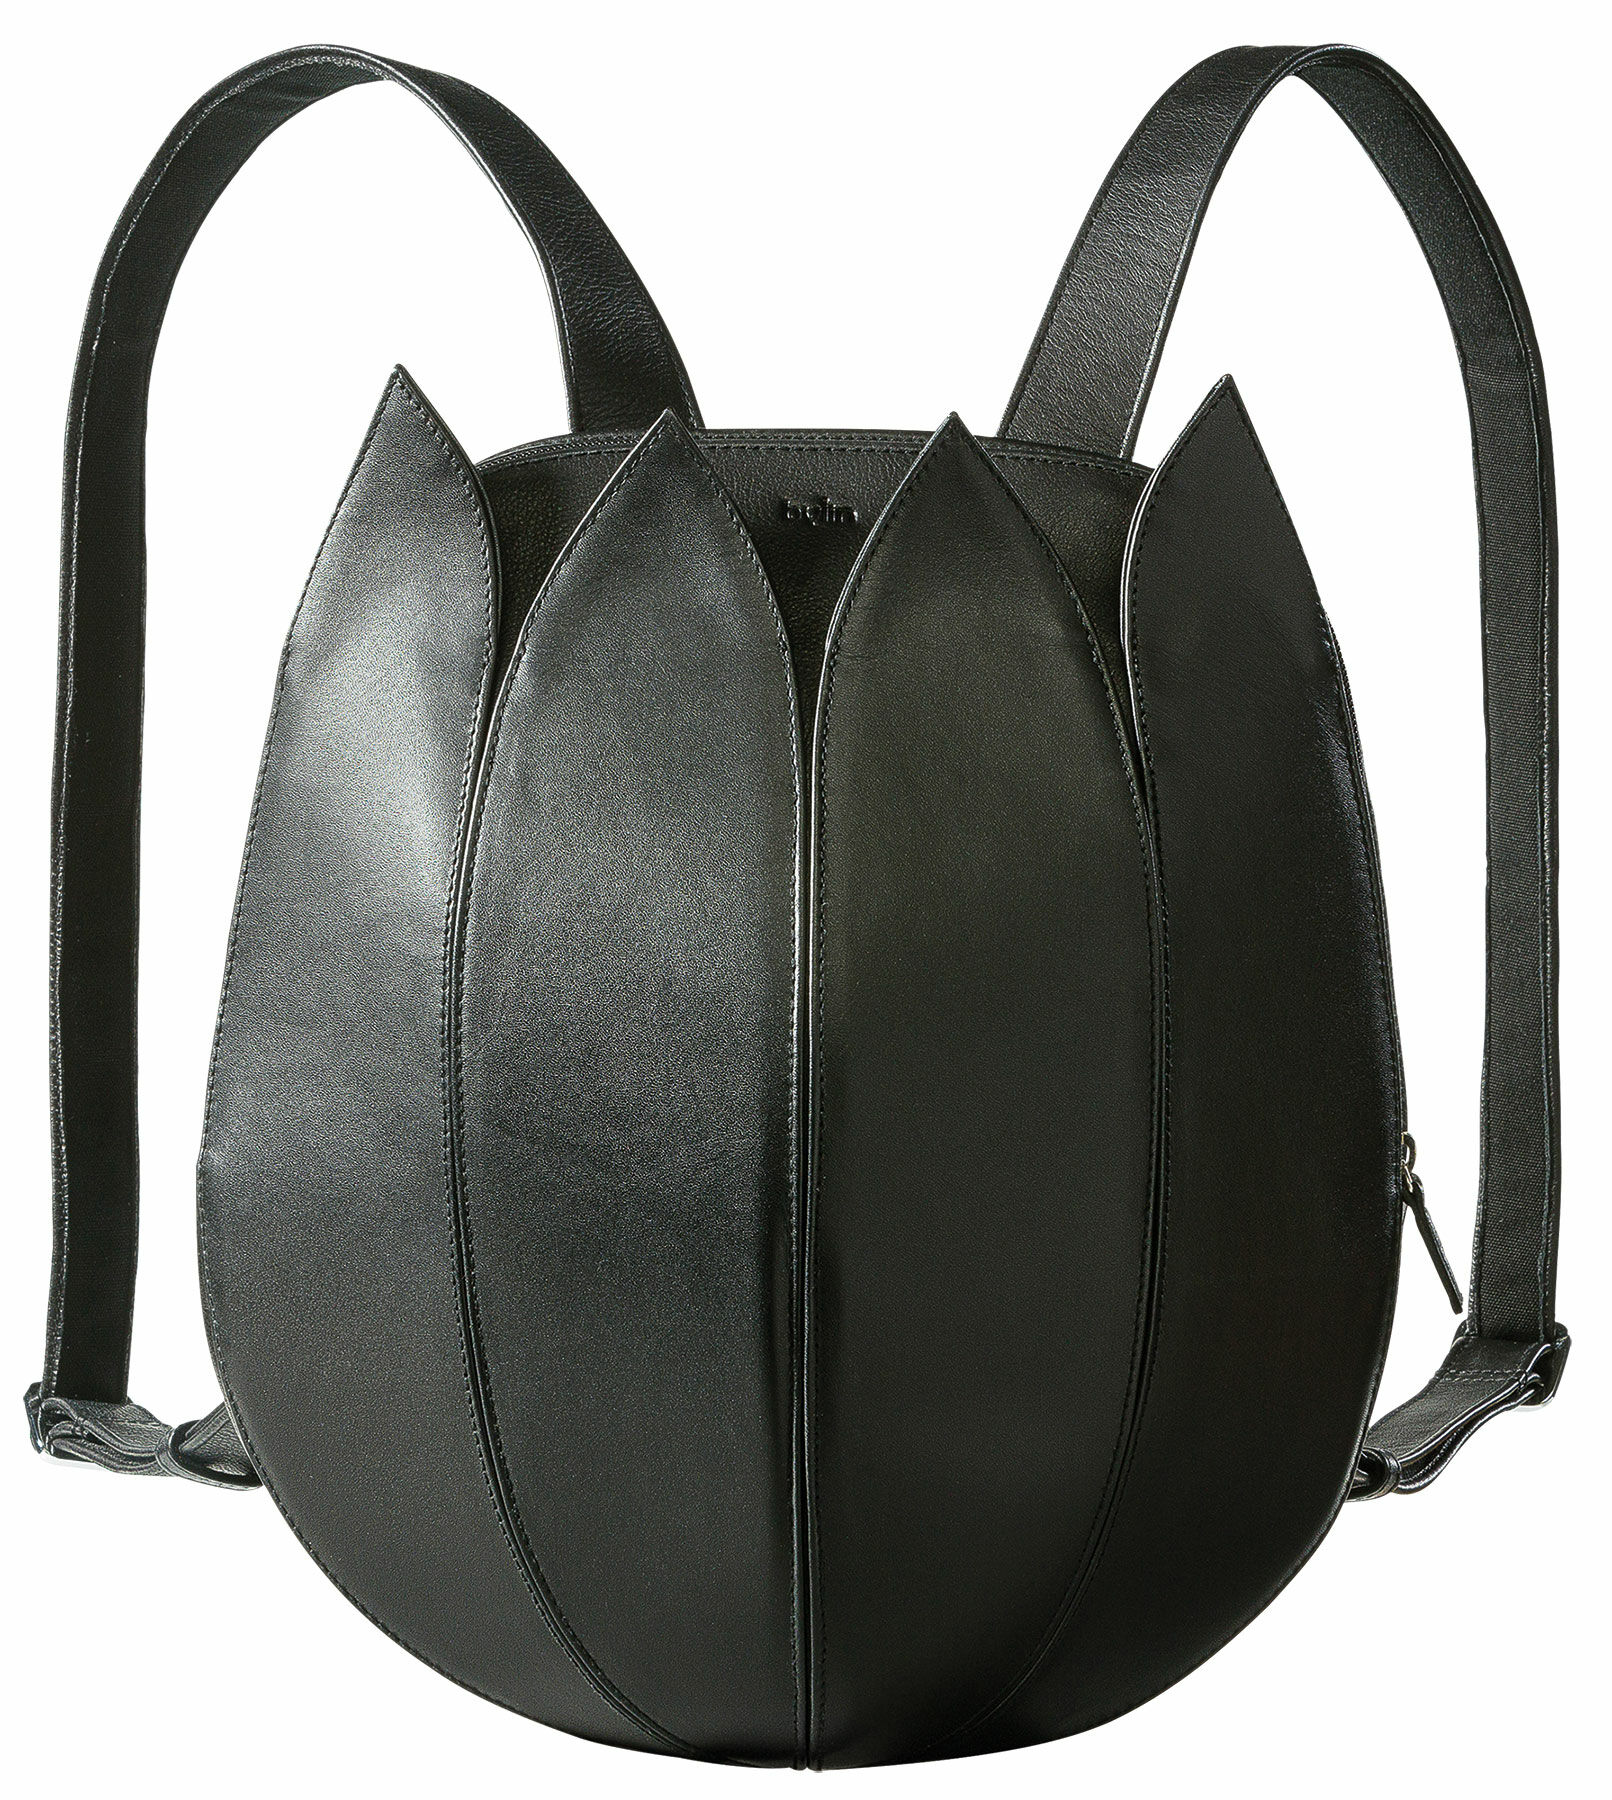 Backpack "Wild Tulip", black version